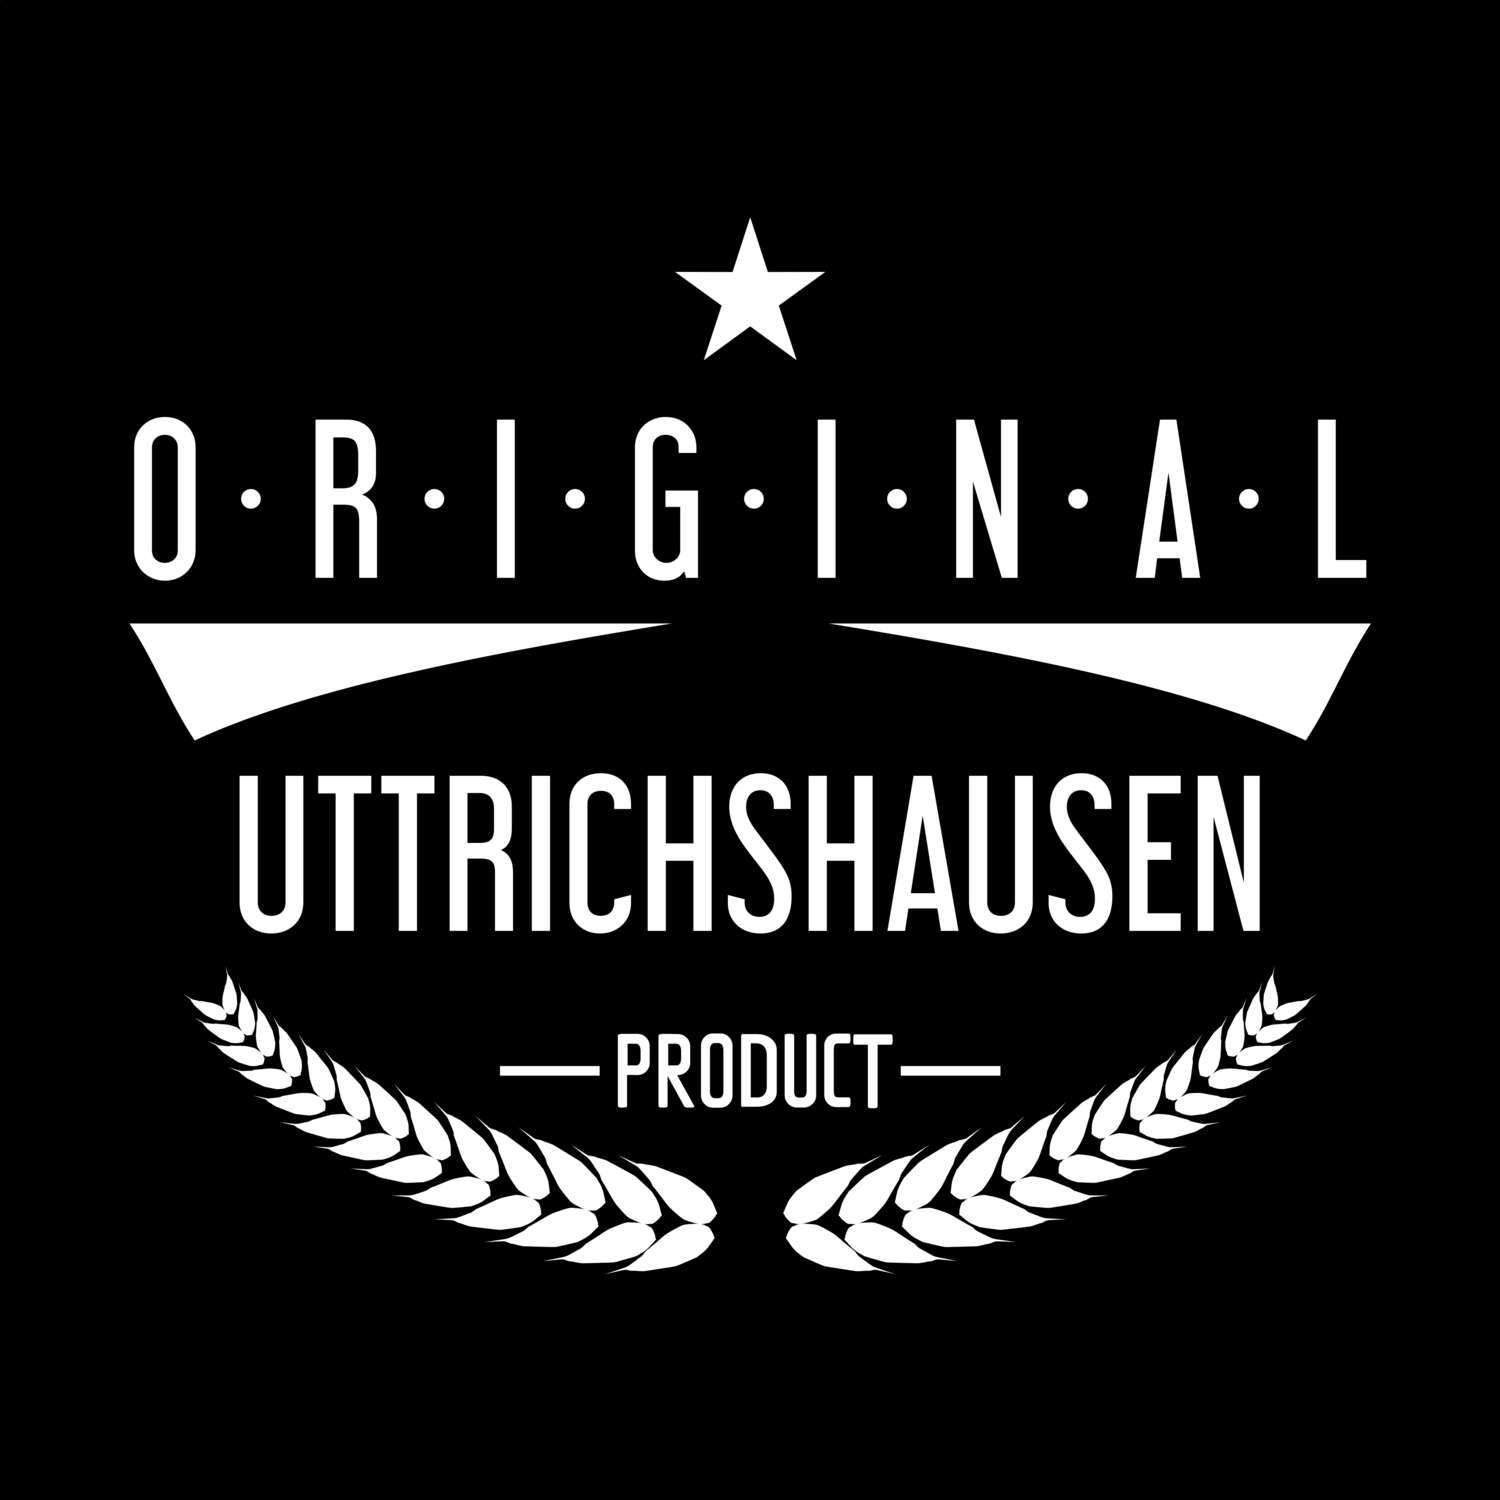 Uttrichshausen T-Shirt »Original Product«